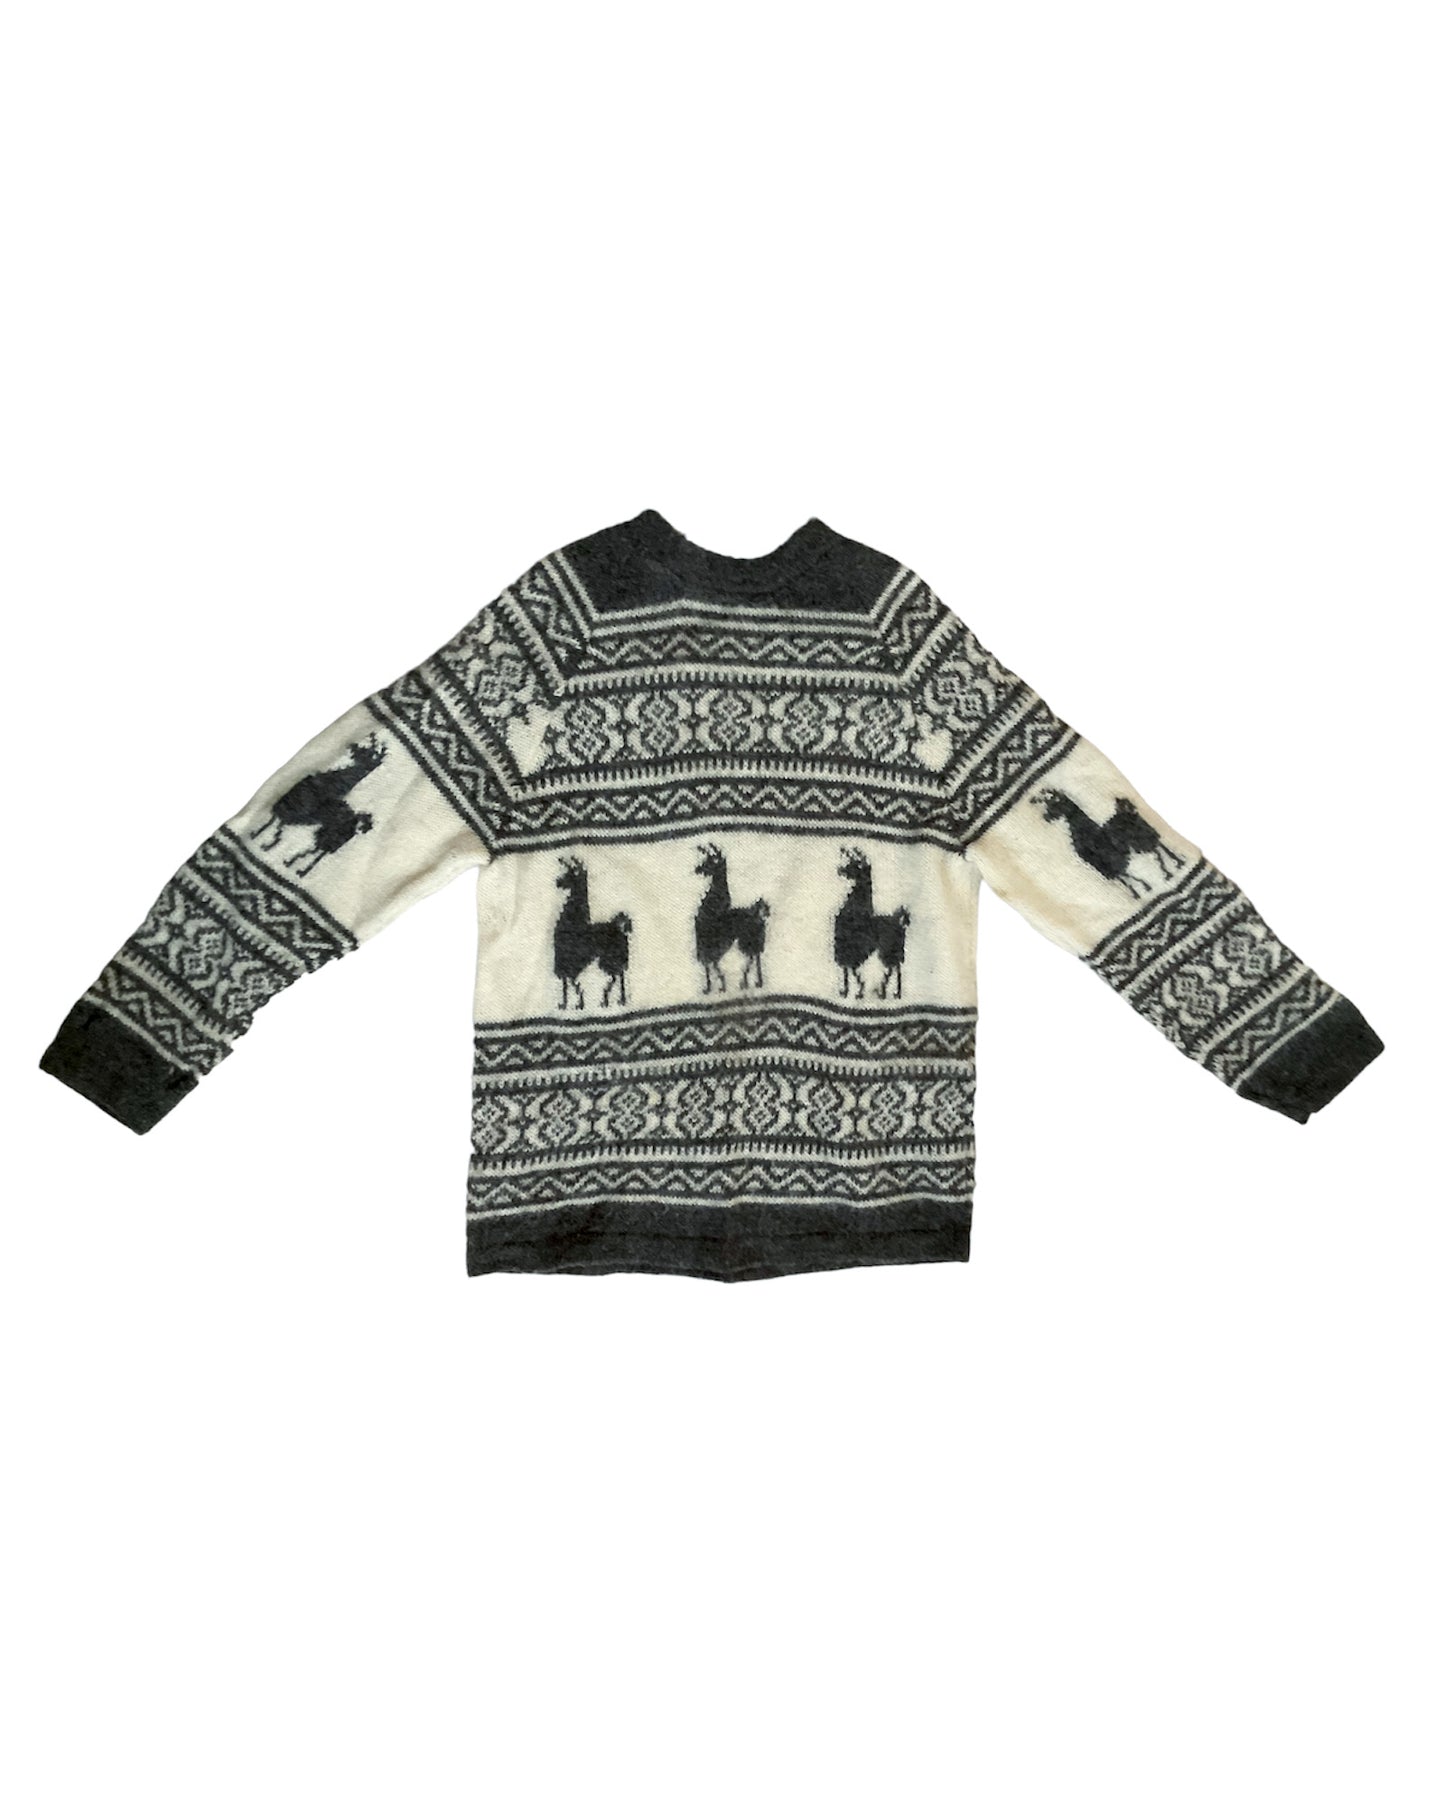 Vintage Handknit Llama Wool Sweater